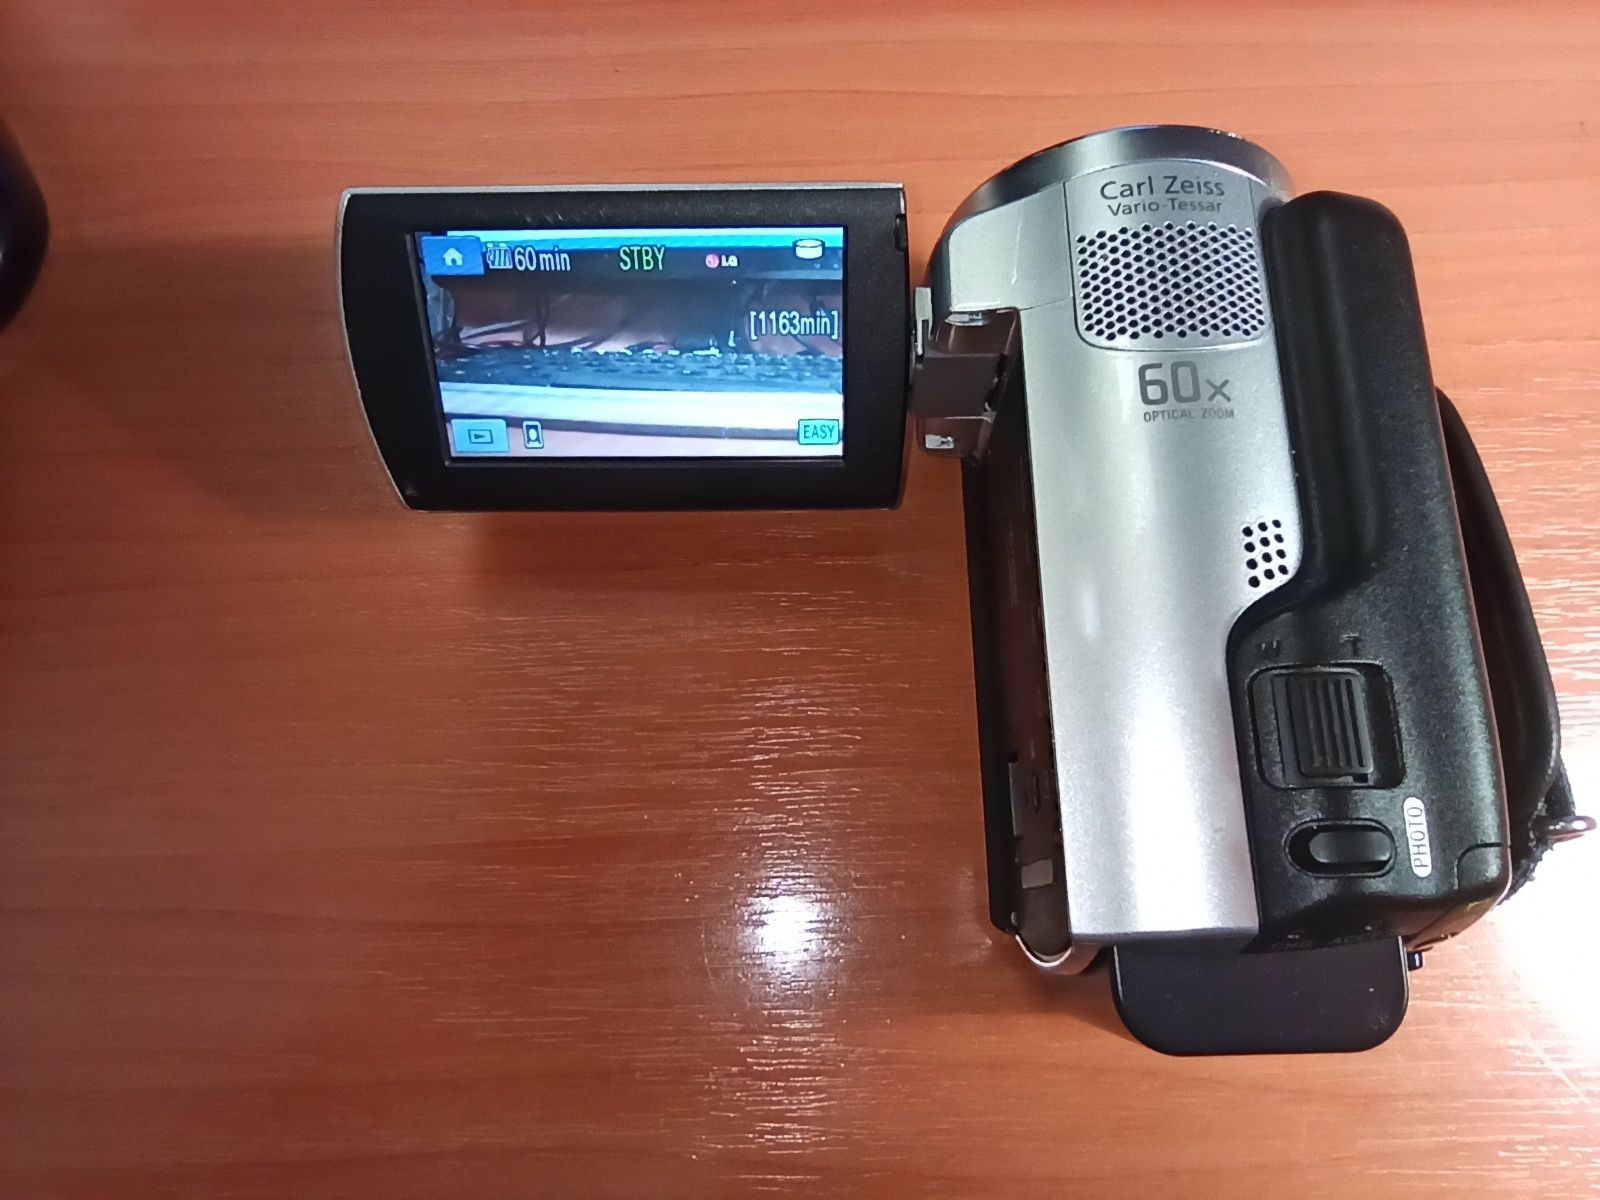 Camera Video Sony Dcr-SR38E Hdd 70GB